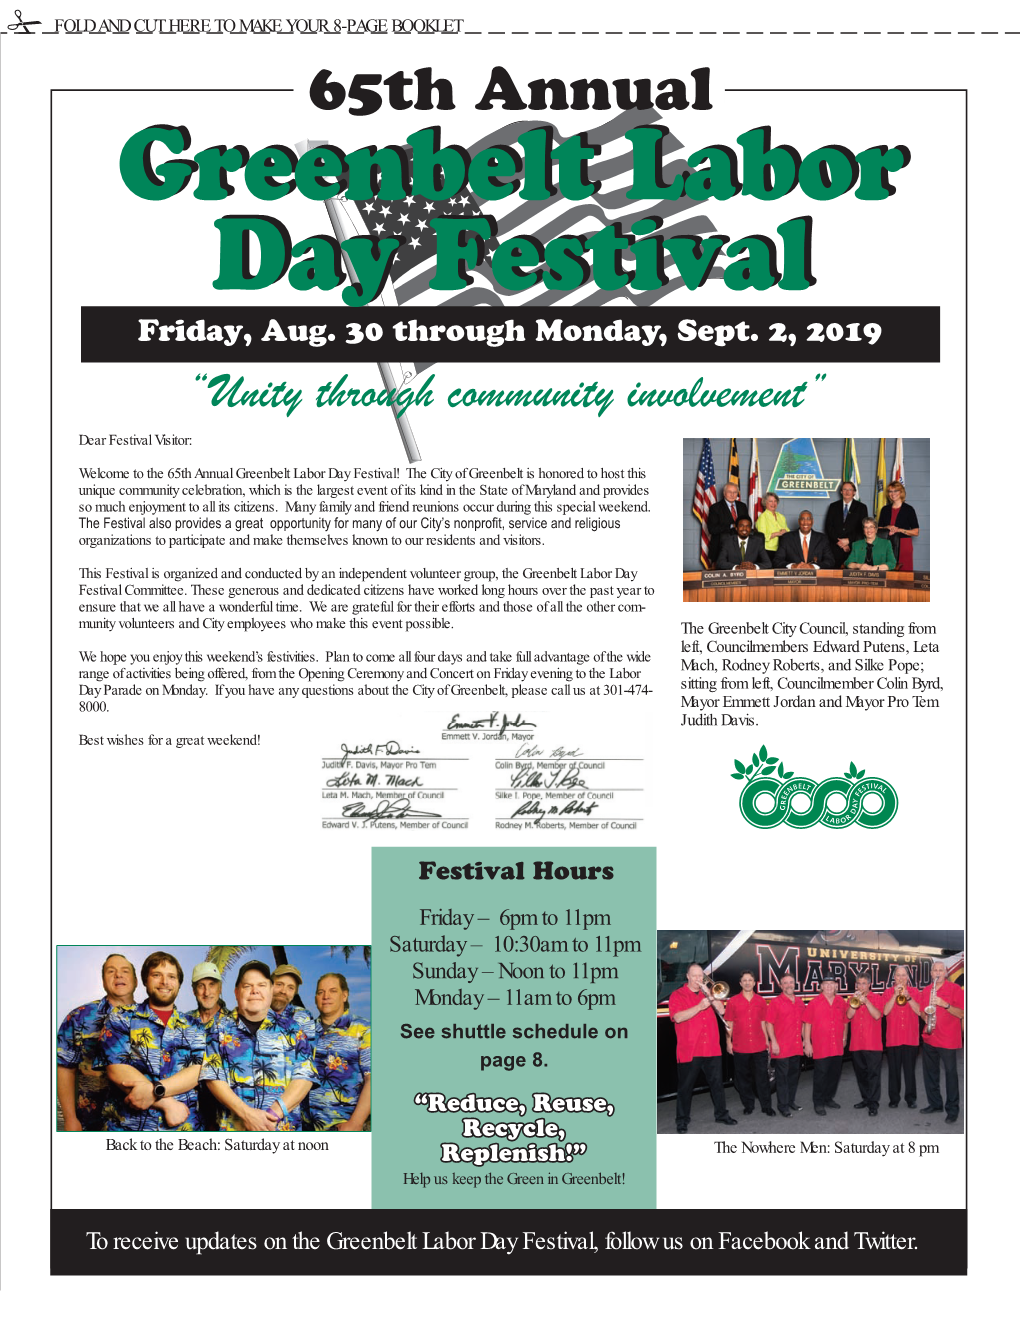 2019 Greenbelt Labor Day Festival Program